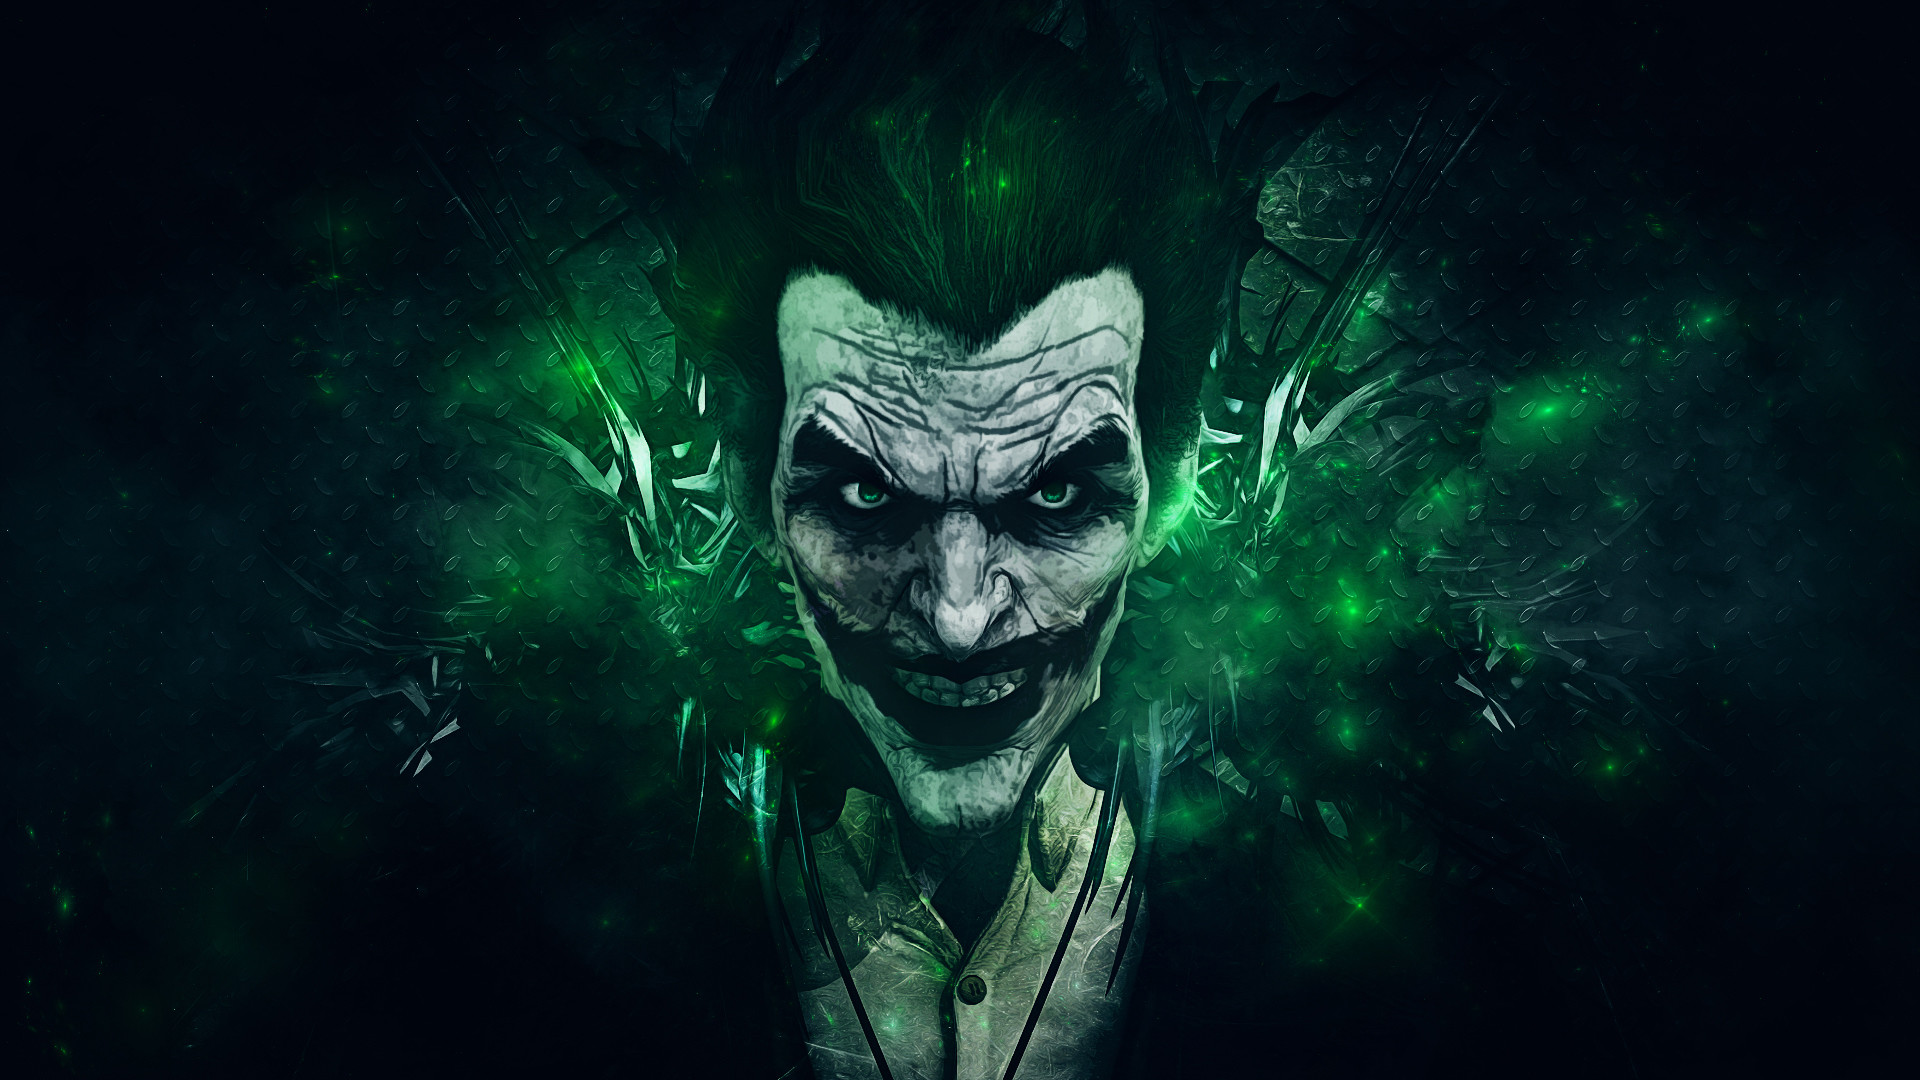  Joker  Backgrounds  71 pictures 